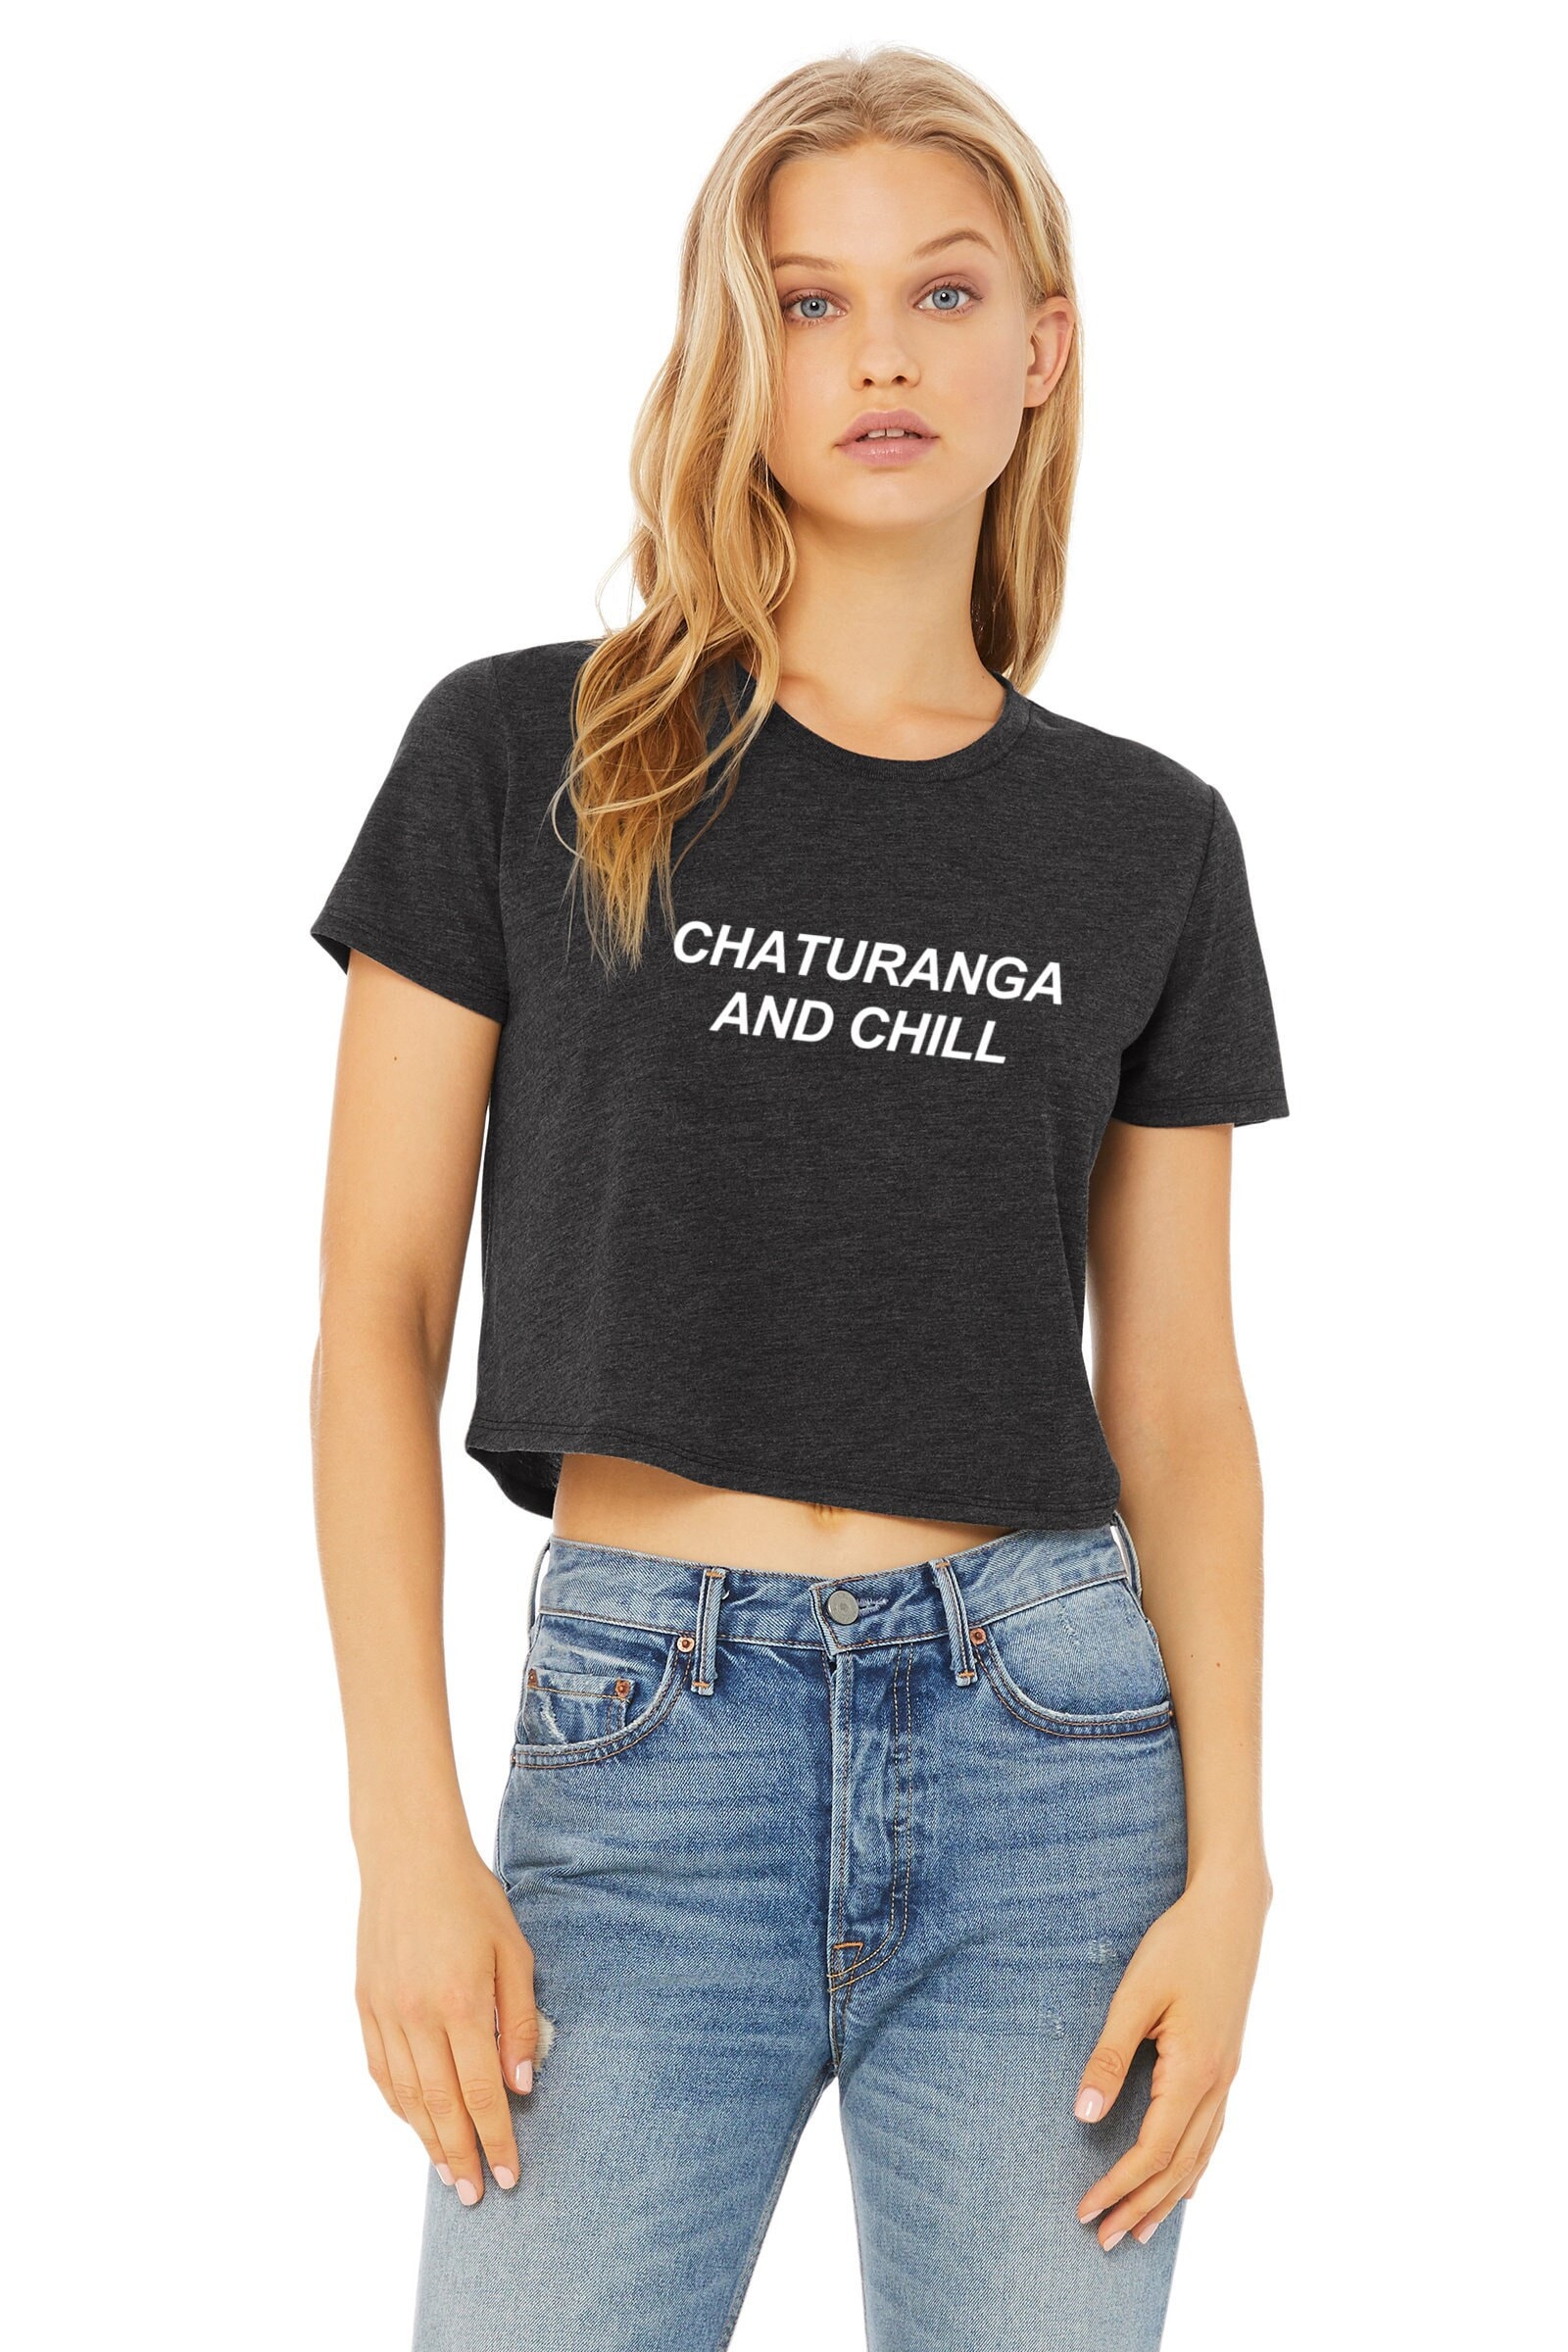 Chaturanga Und Chill | Yoga-Shirt Yoga-Crop-Top Yoga Geschenk Yoga-Lehrerin Lehrerin Kurzarm T-Shirt Training-Crop-Top von GymWeekendApparel